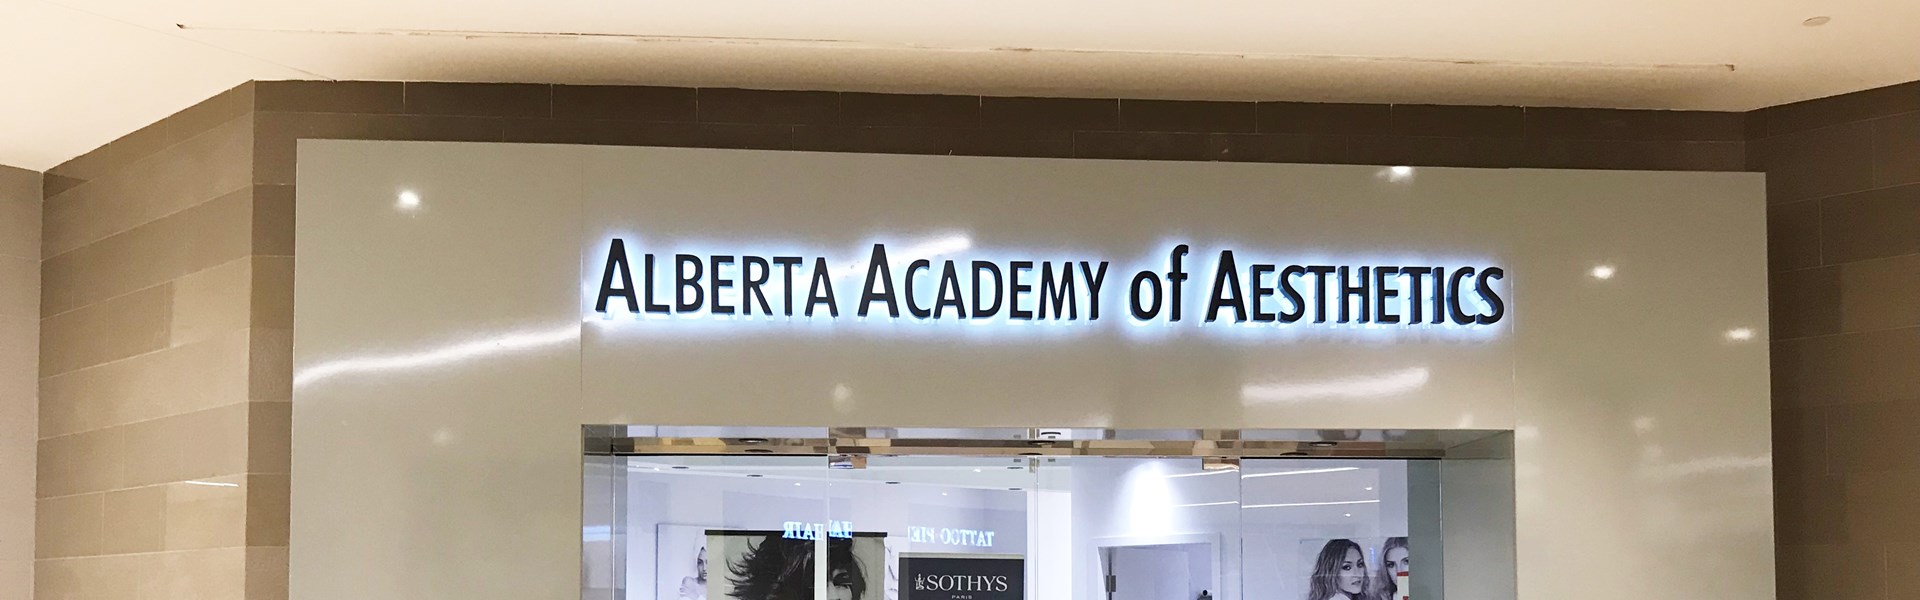 Alberta Academy of Aesthetics - Phase IV